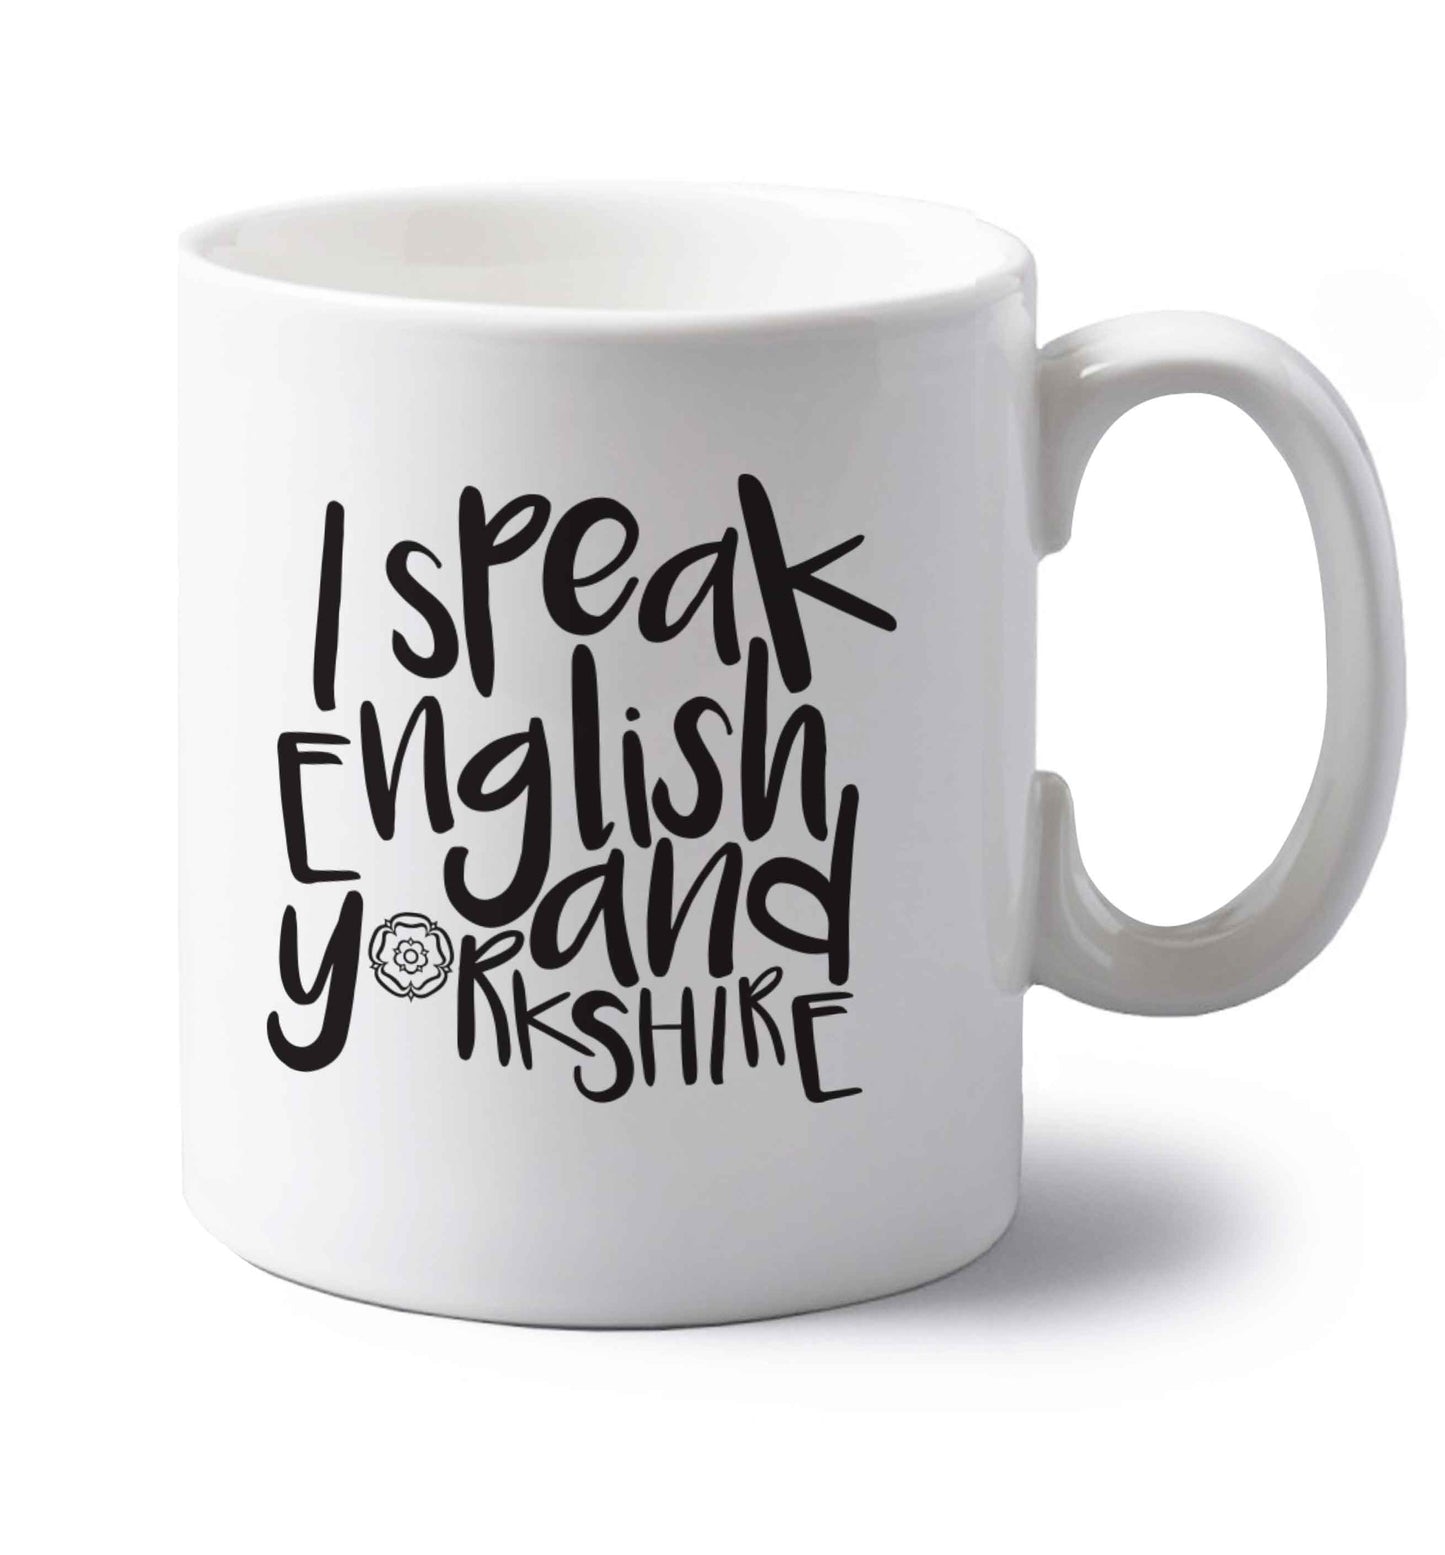 I speak English and Yorkshire left handed white ceramic mug 